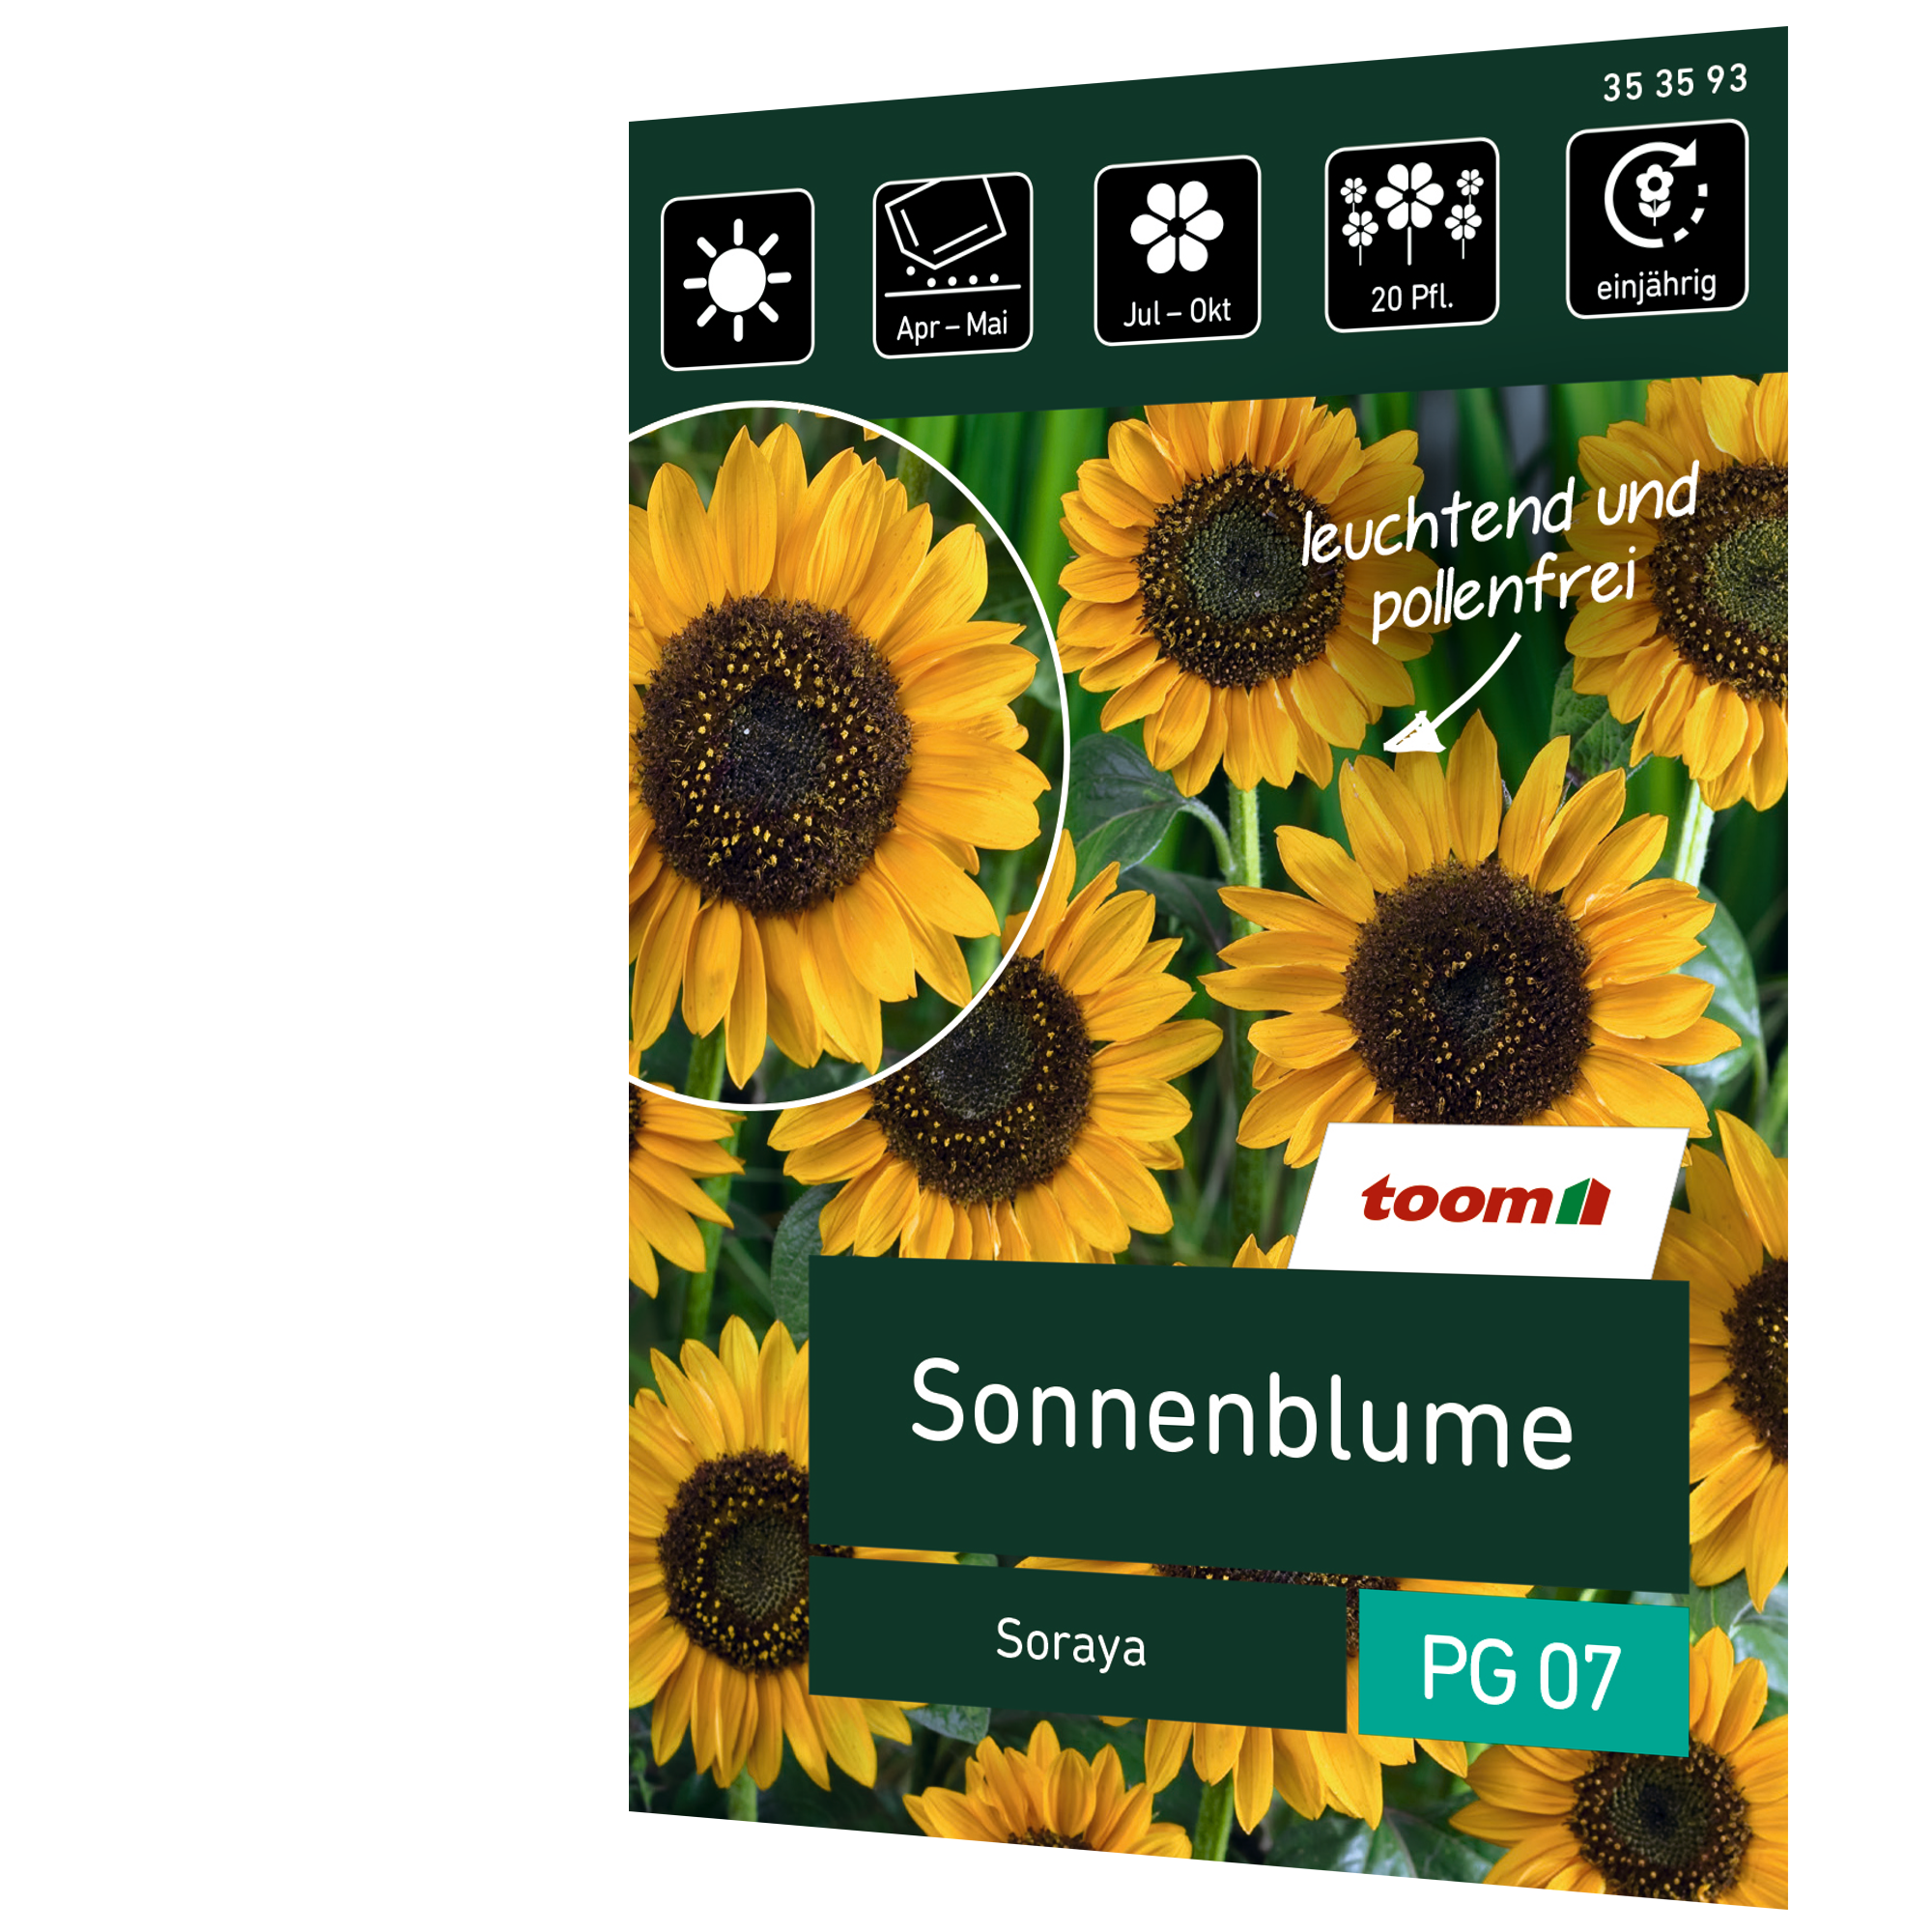 Sonnenblume 'Soraya' + product picture